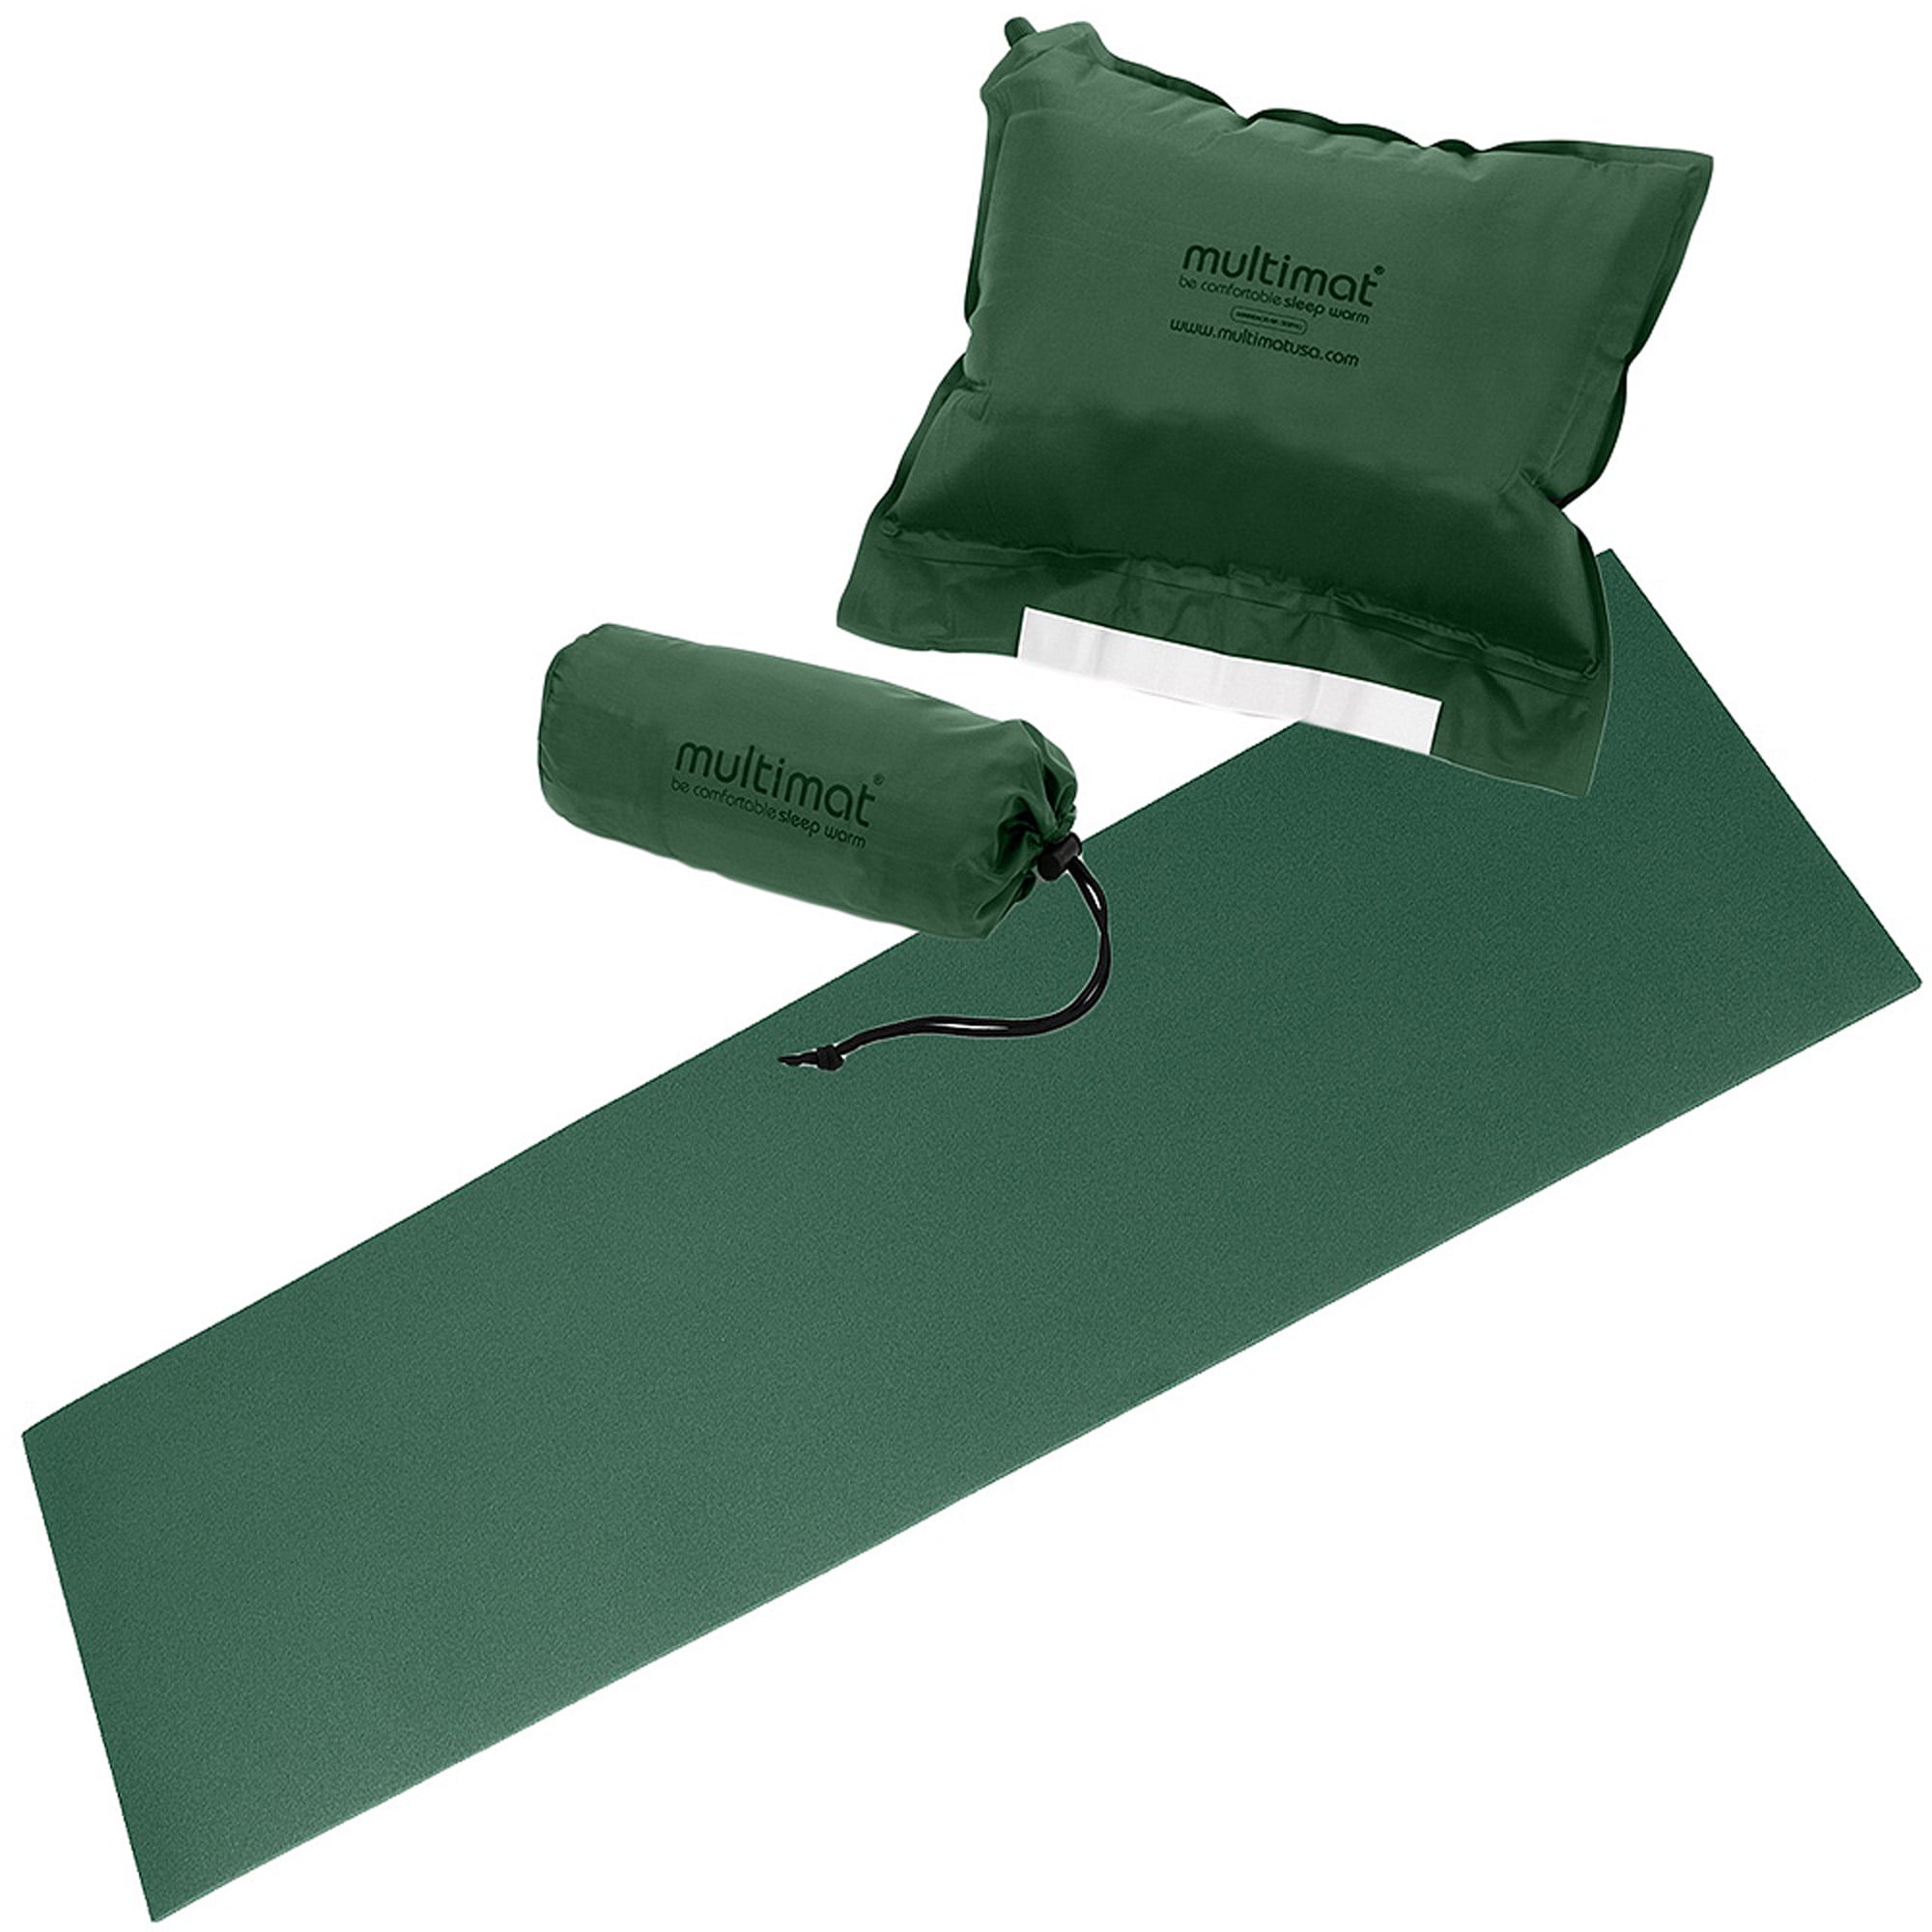 New Multimat Camping Trekker 25 Self Inflating Sleeping Mat